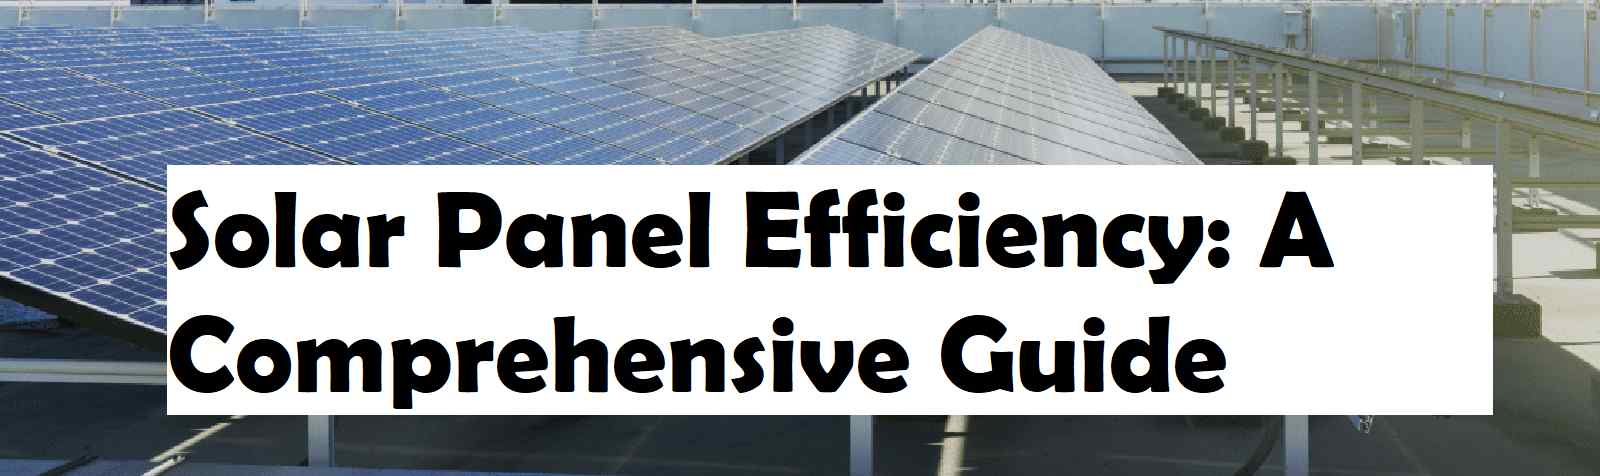 Solar Panel Efficiency: A Comprehensive Guide